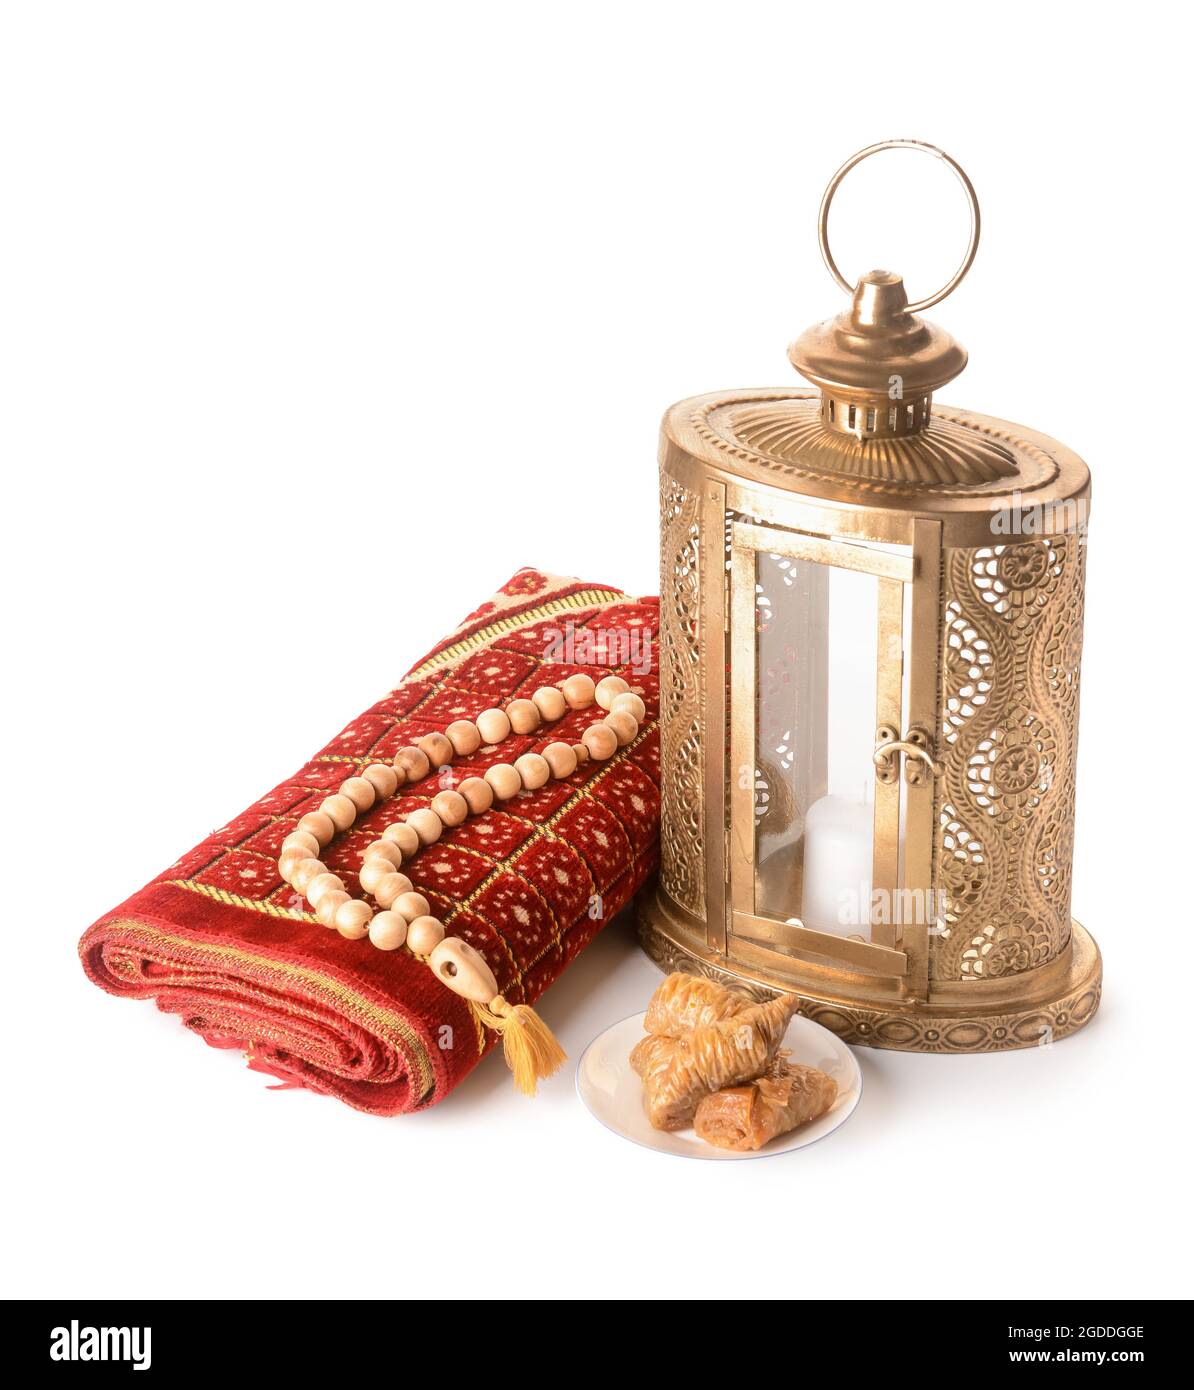 Muslim lantern with prayer rug, tasbih and Turkish sweets on white background Stock Photo